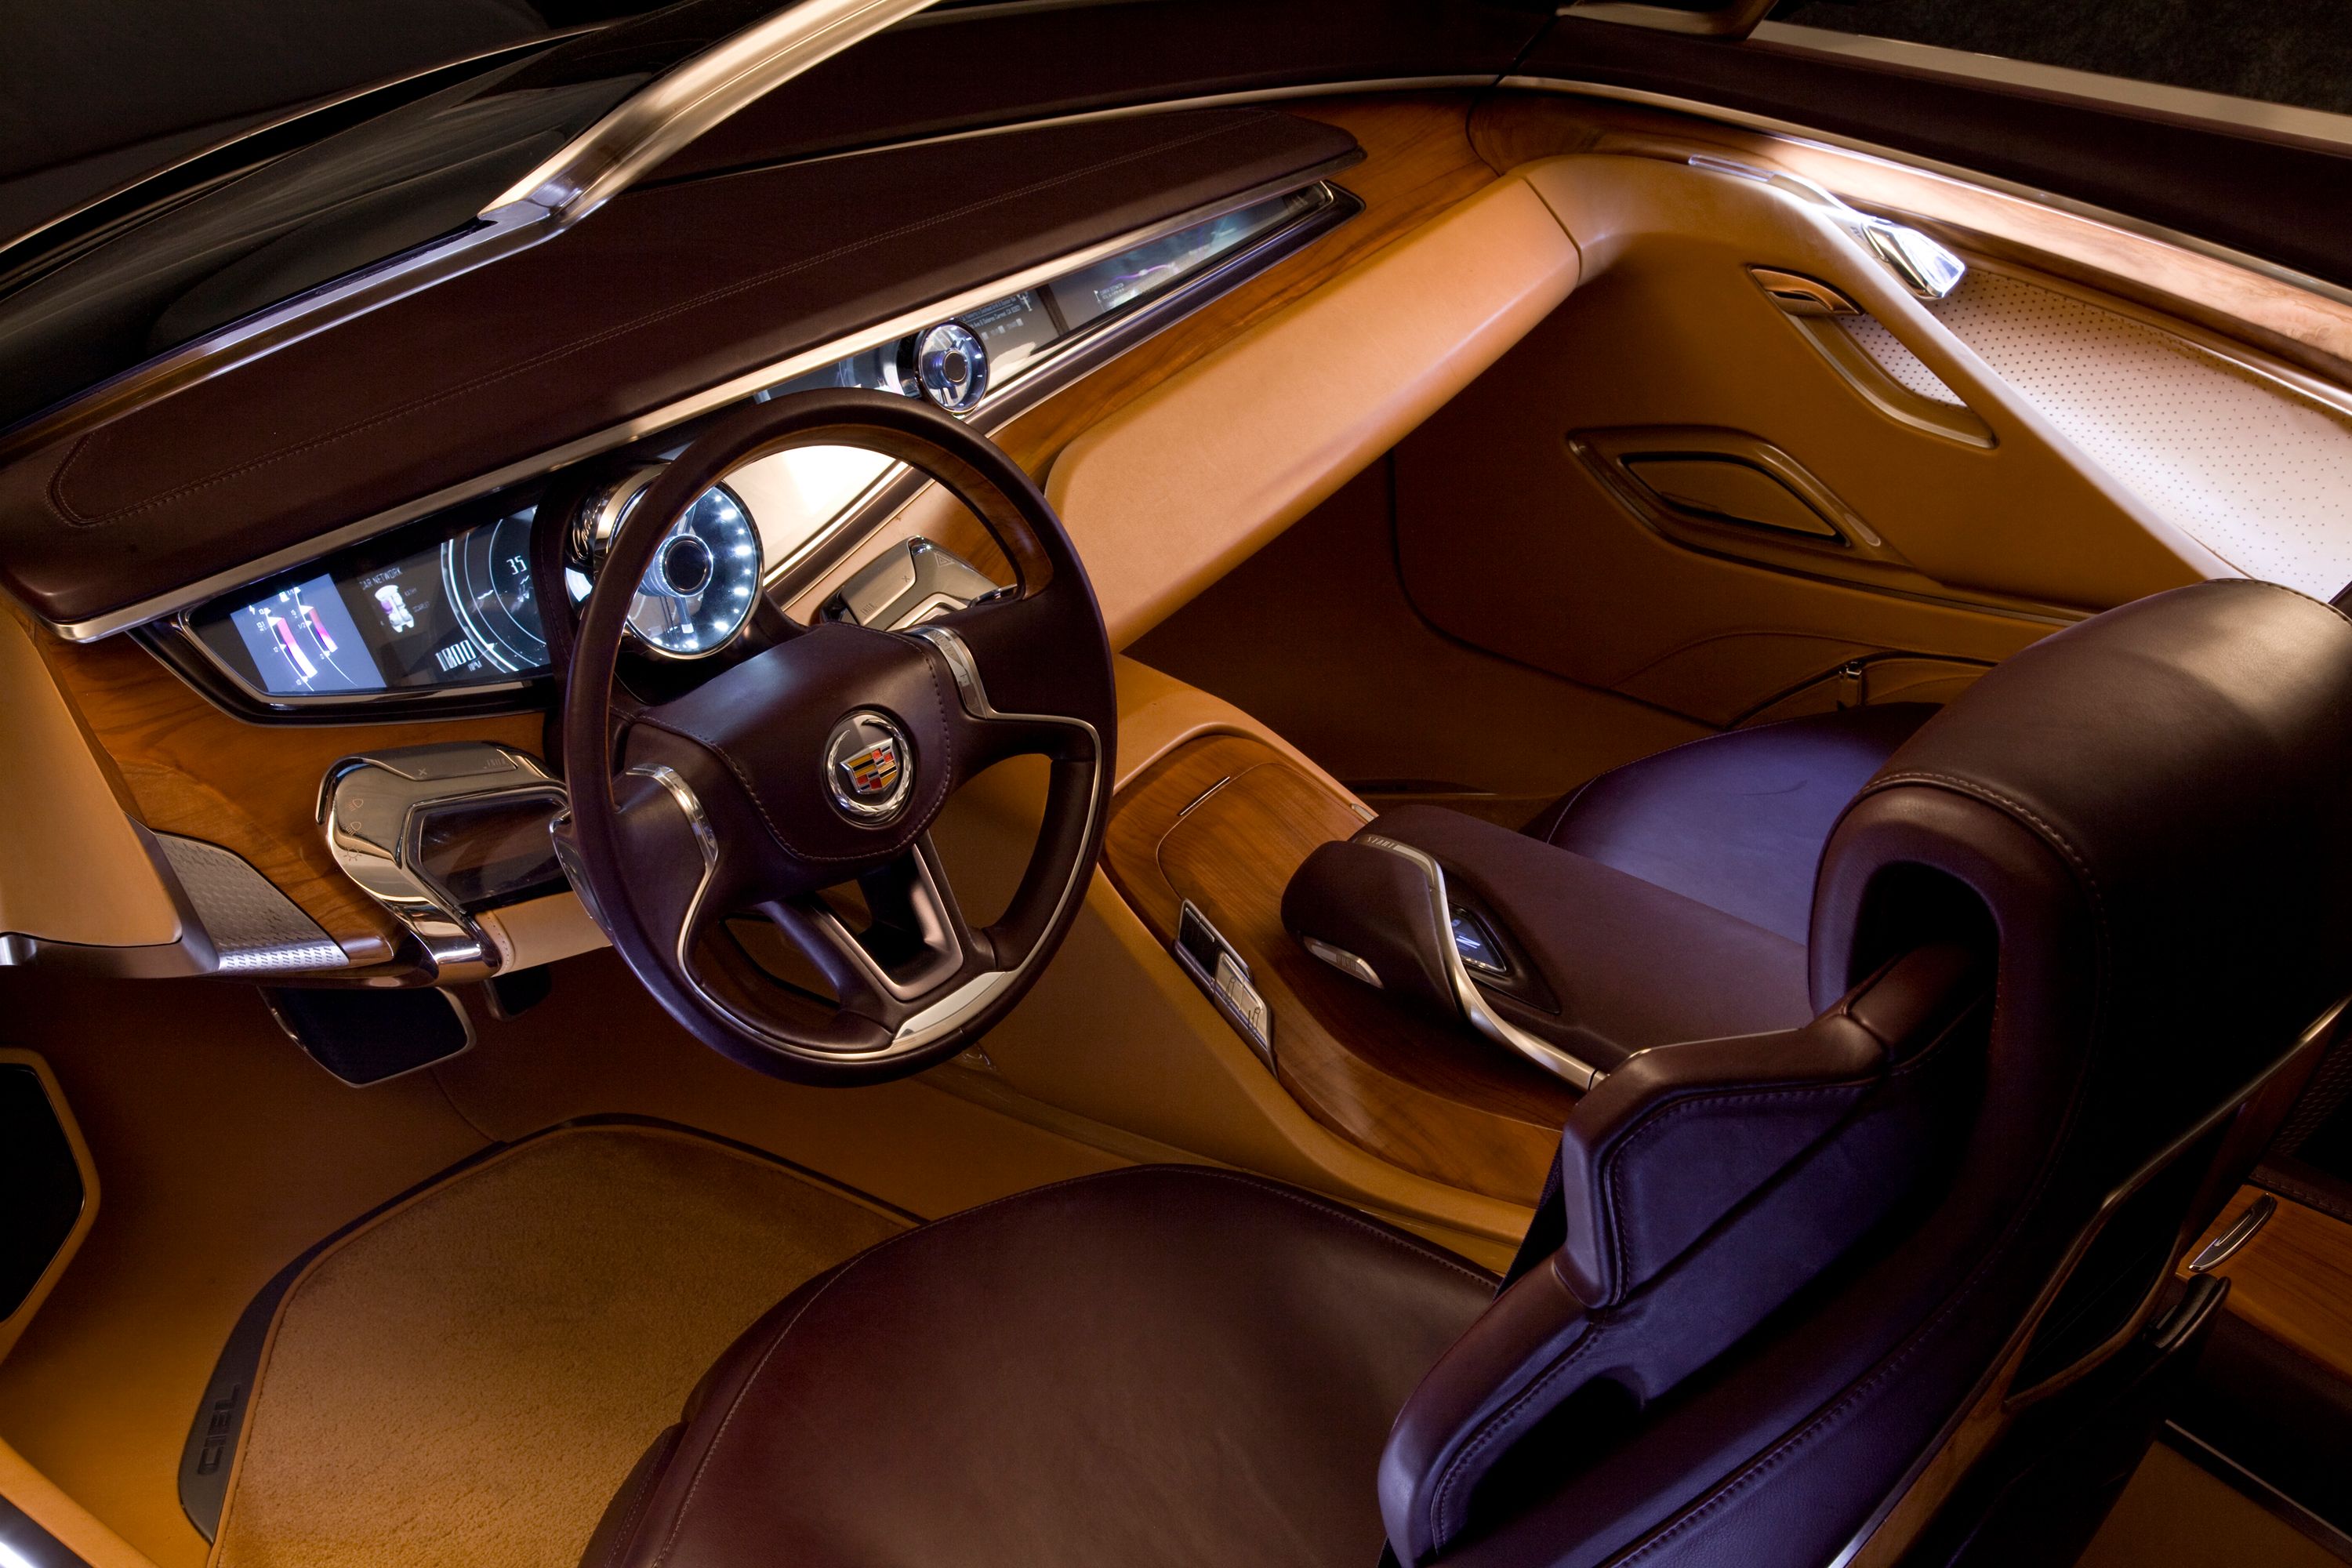 The interior of the 2011 Cadillac Ciel Concept Car.